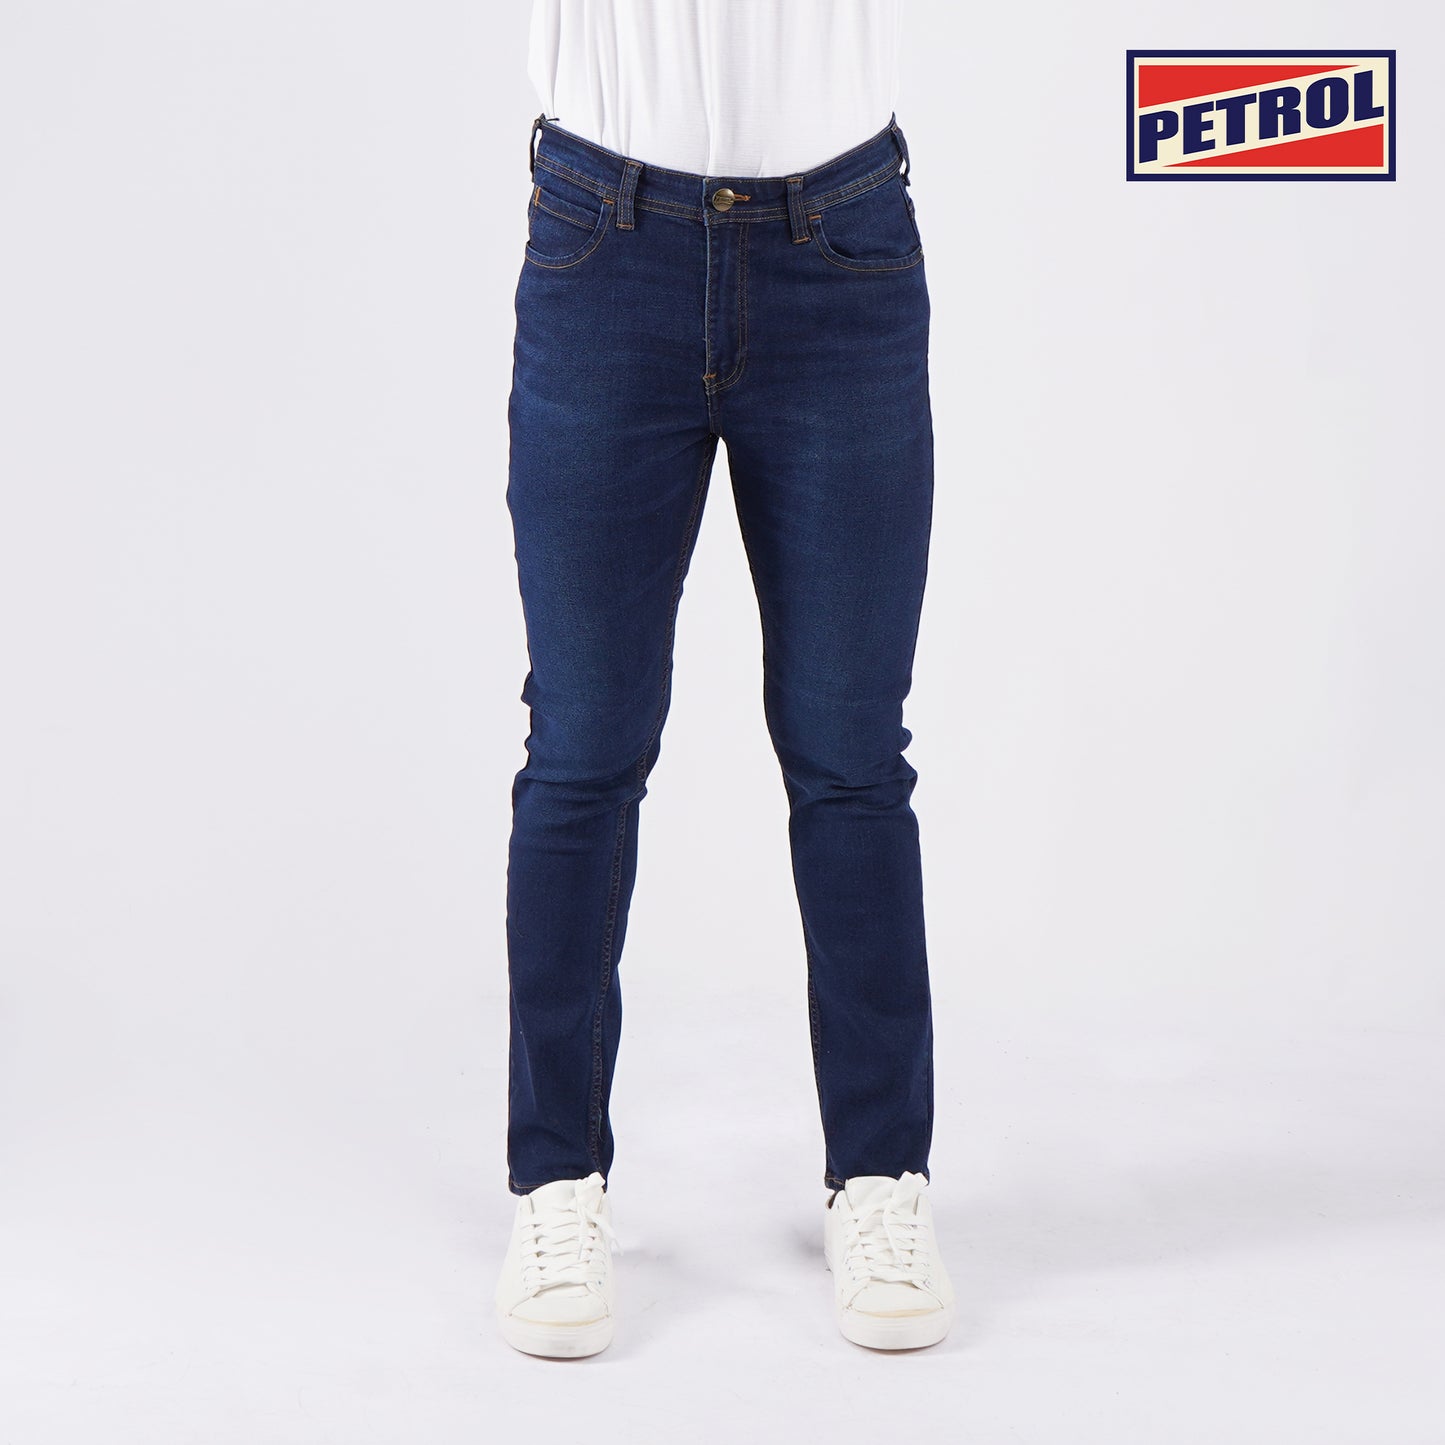 Petrol Basic Denim Pants for Men Skin Tight Fitting Mid Rise Trendy fashion Casual Bottoms Dark Shade Jeans for Men 144197-U (Dark Shade)